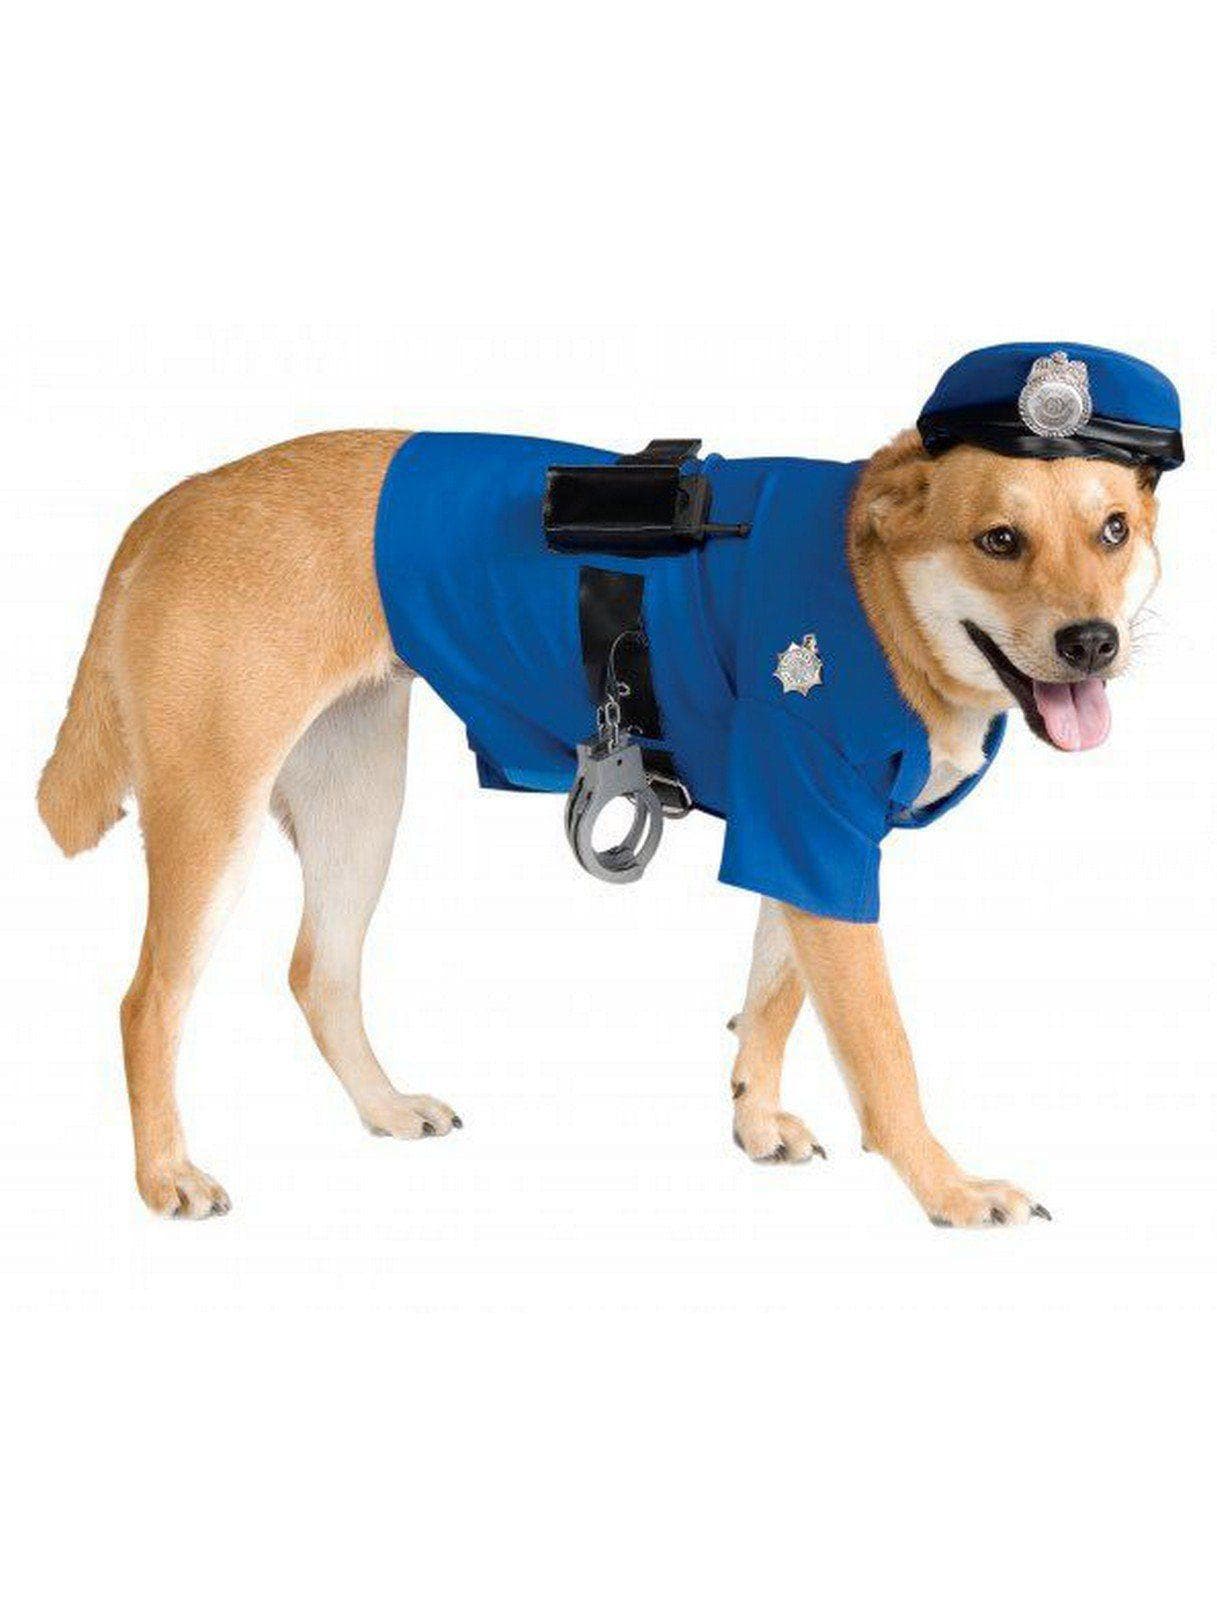 Police Big Dog Pet Costume - costumes.com